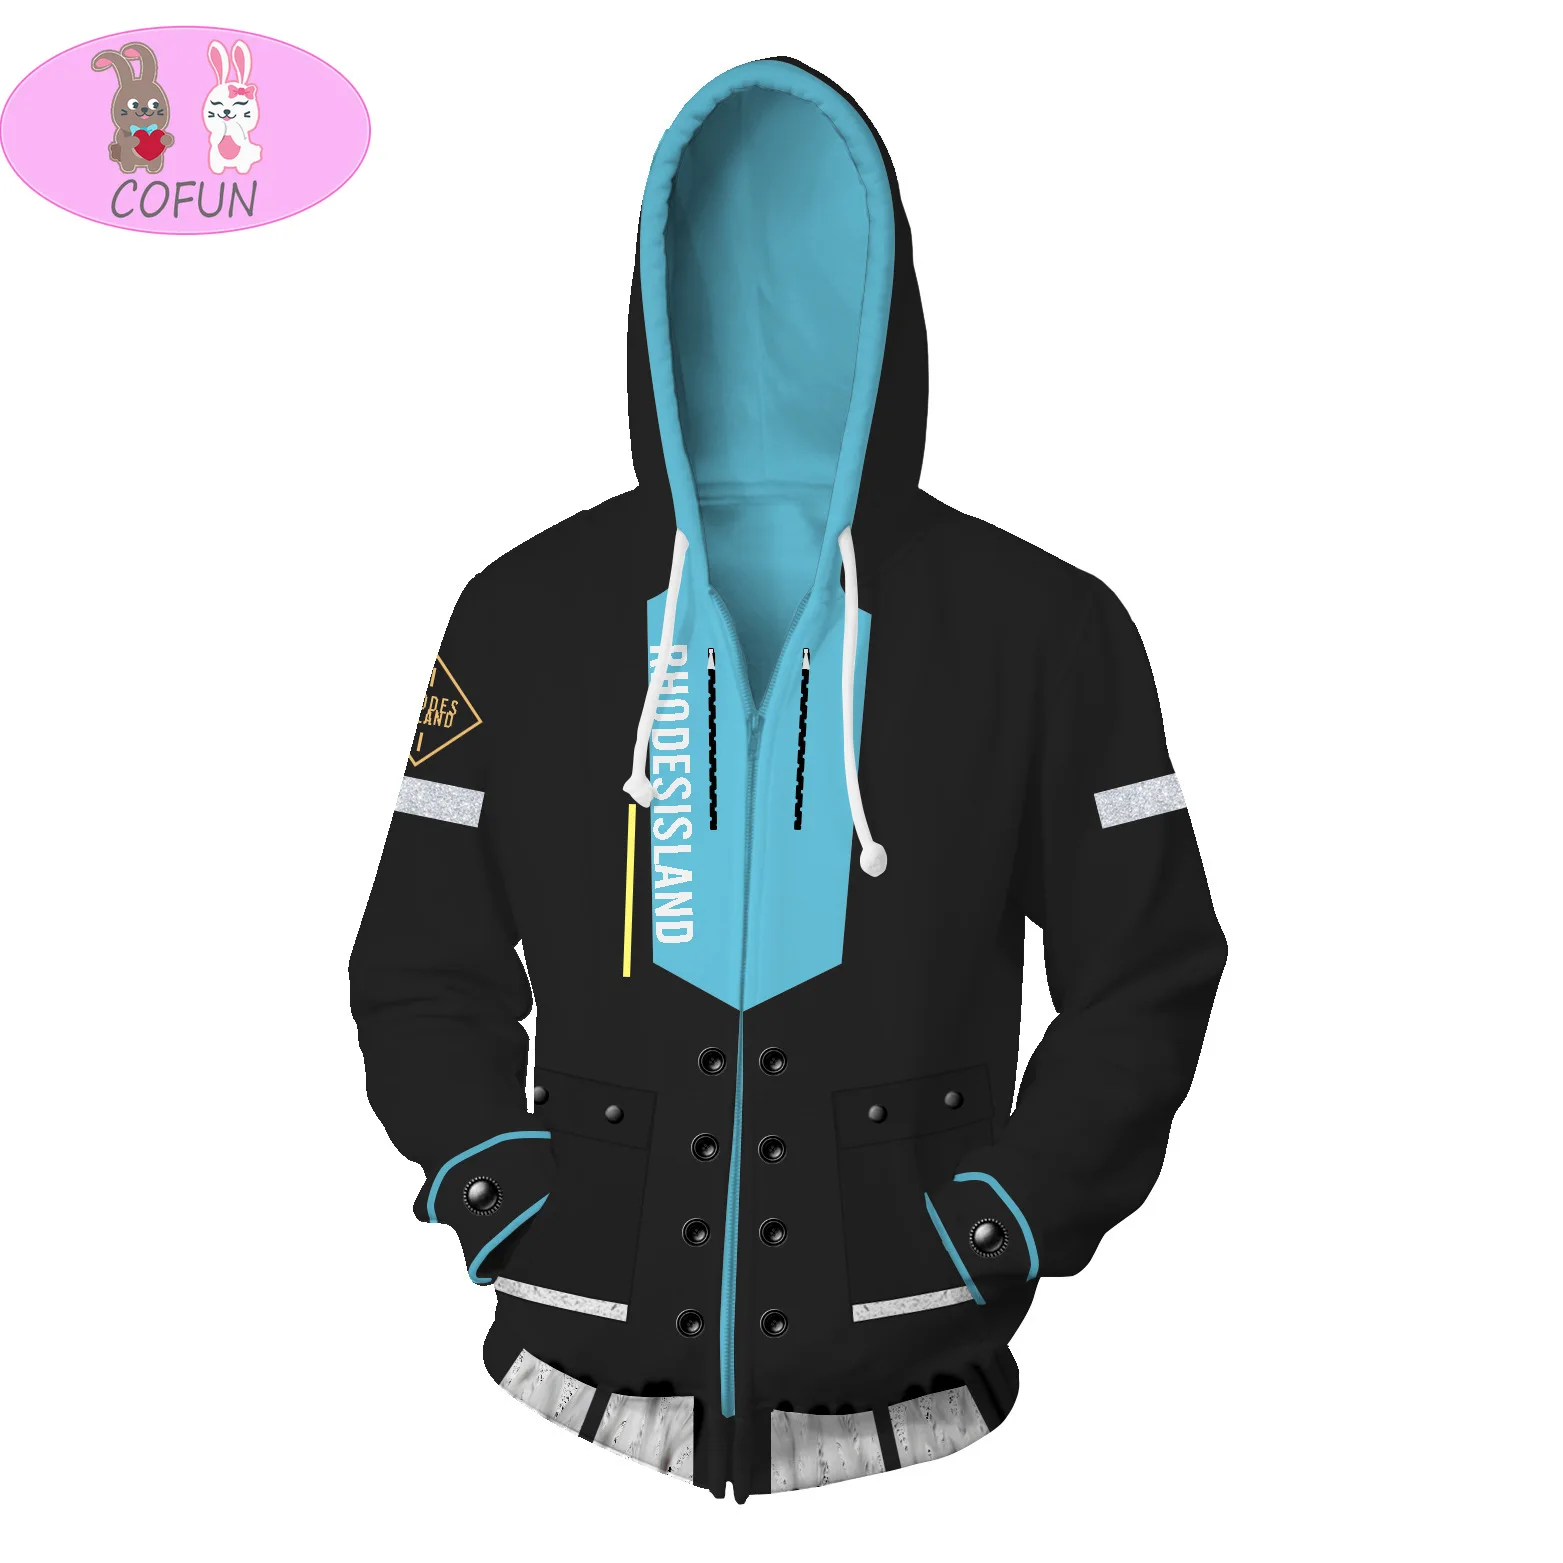 

Hot Game Arknights Rhodes Island zipper Hoodie Caster Amiya Cosplay Jacket long sleeve Coat Outerwear Tops